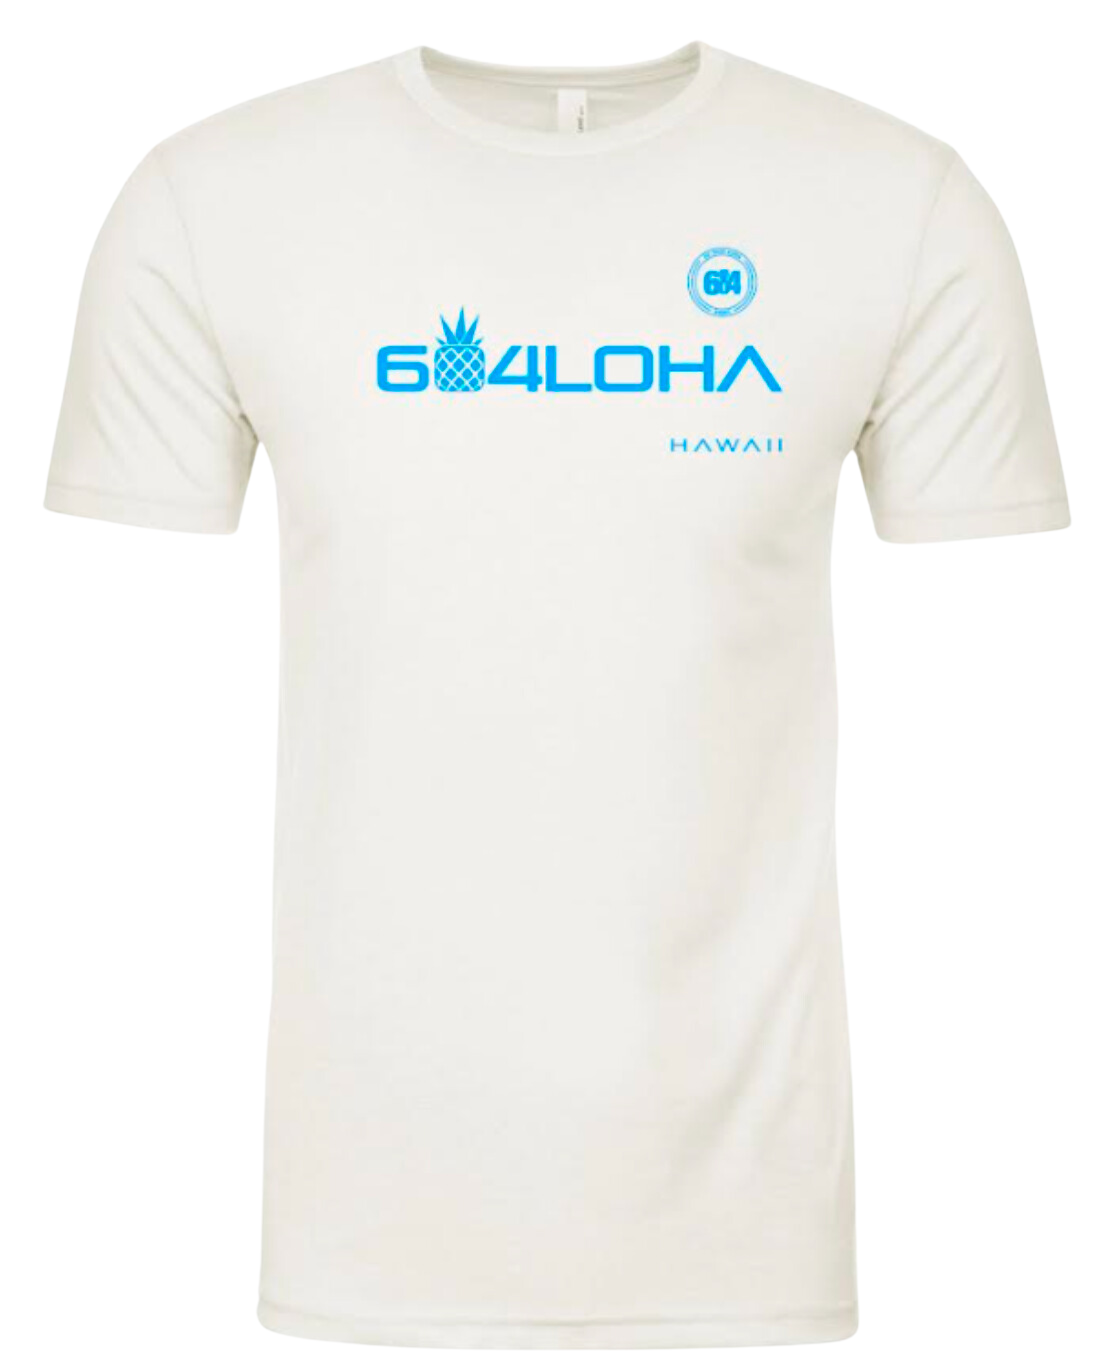 White w/ blue logo Men's T-Shirt 604LOHA